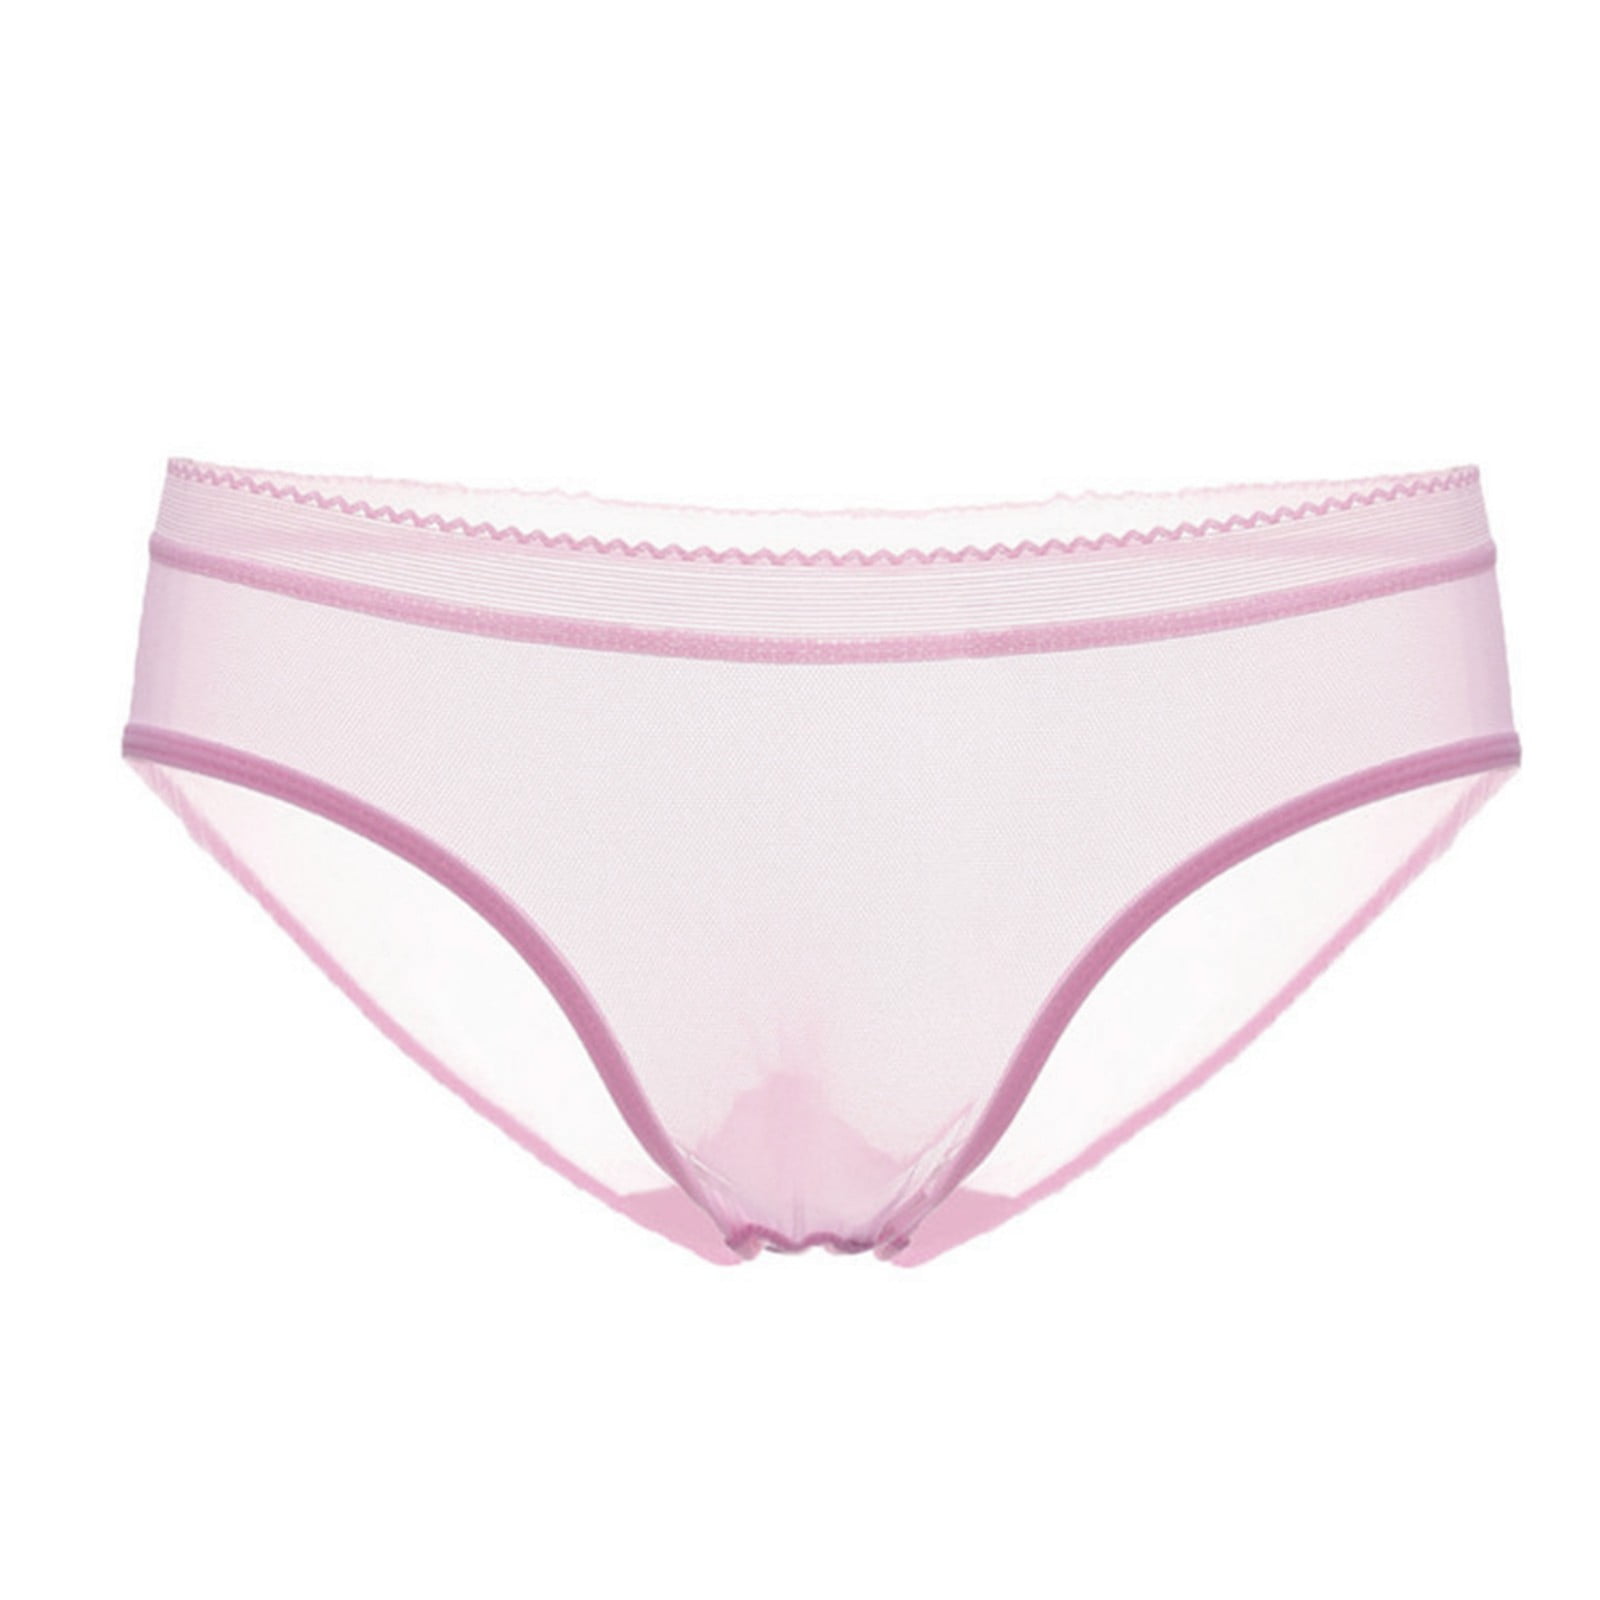 CBGELRT Women's Brief Transparent Panties Women's Underwear Mesh See  Through Comfort Briefs Low Rise Underpants seamless Underwear Thong XL Hot  Pink 